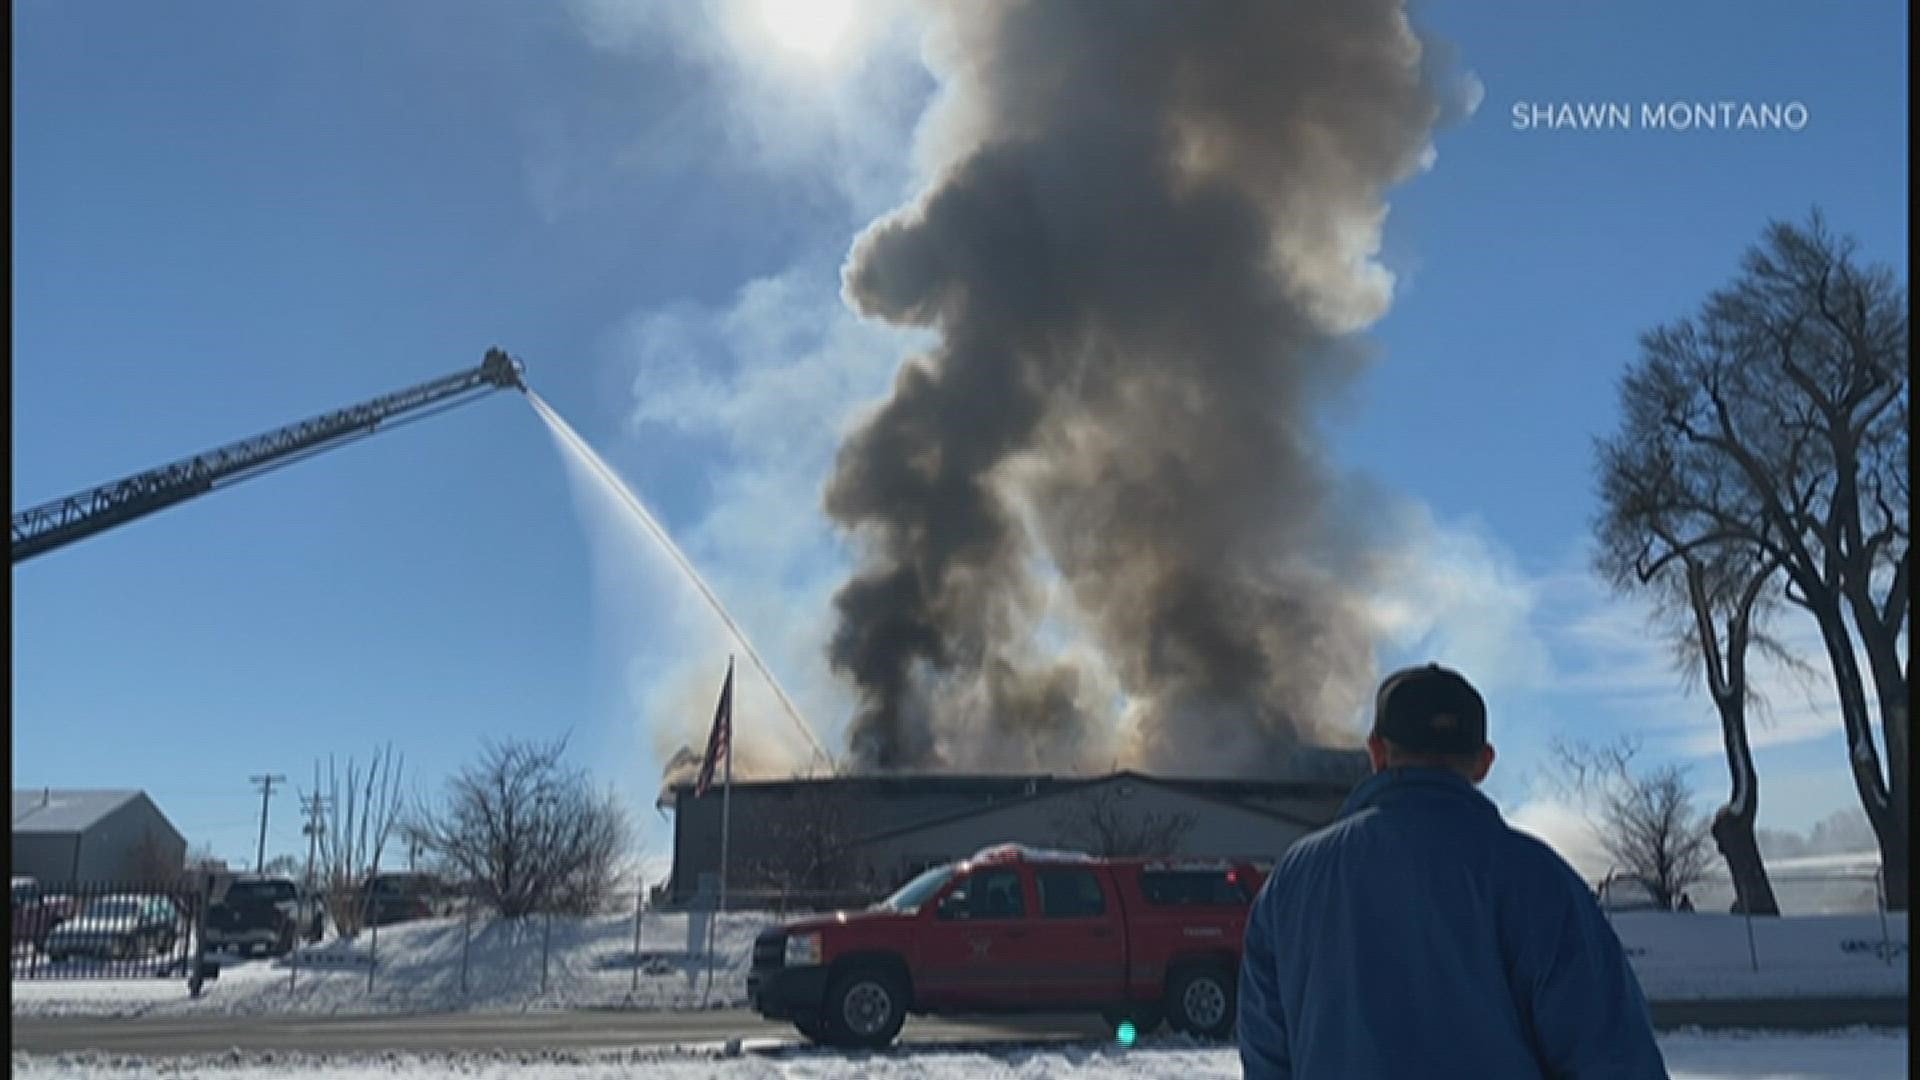 RAW: Fire burning at Greeley auto garage